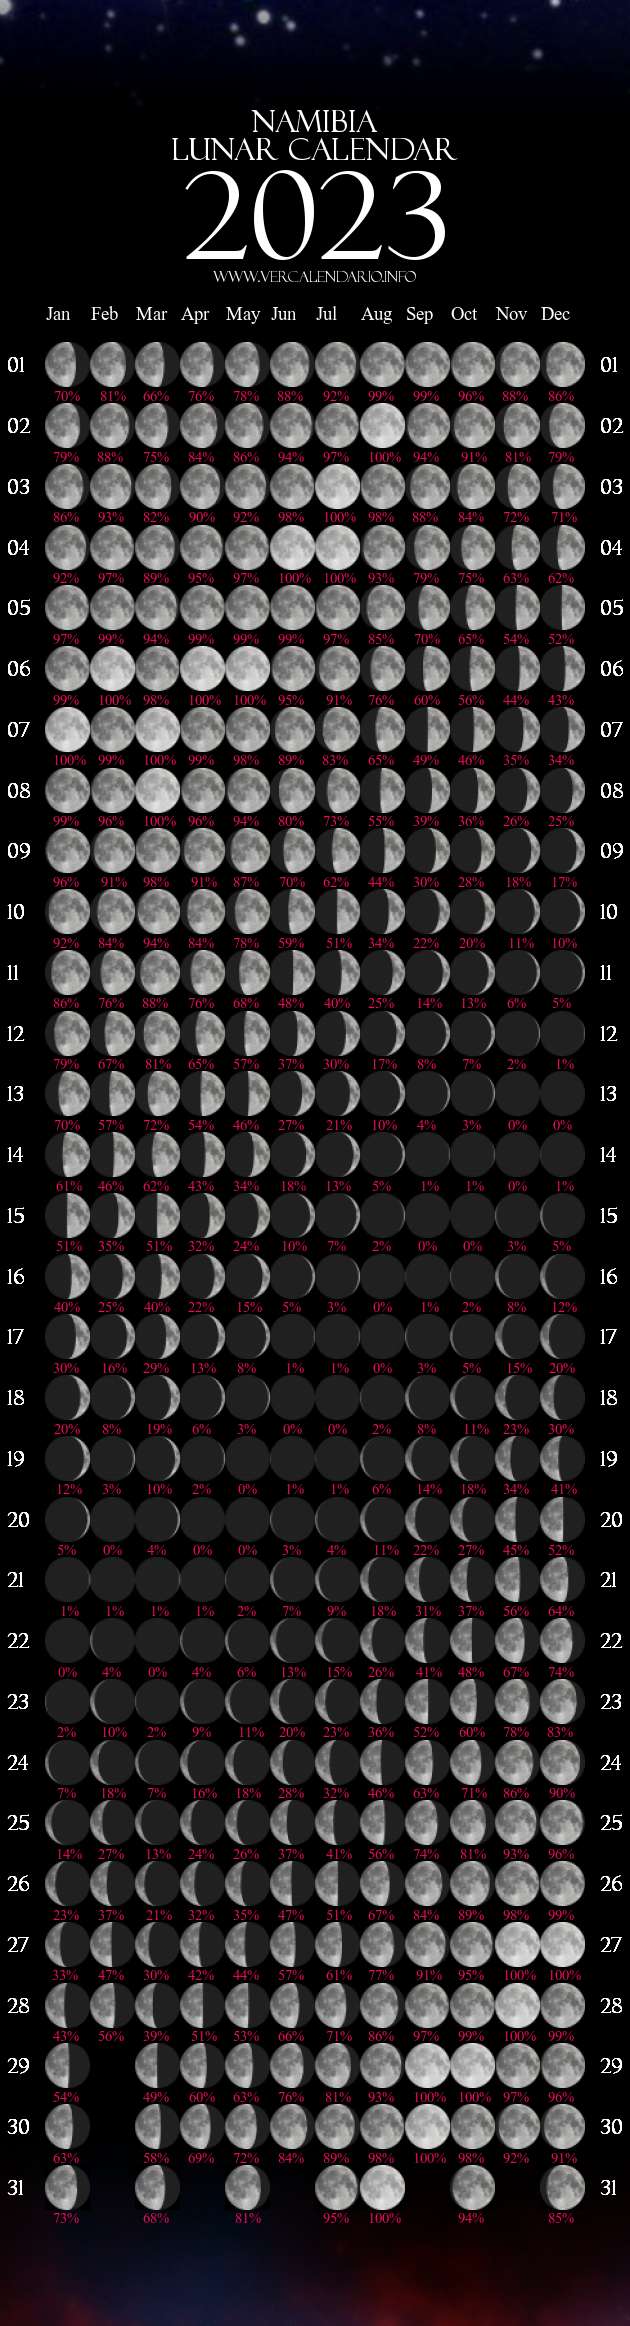 Lunar Calendar 2023 (Namibia)